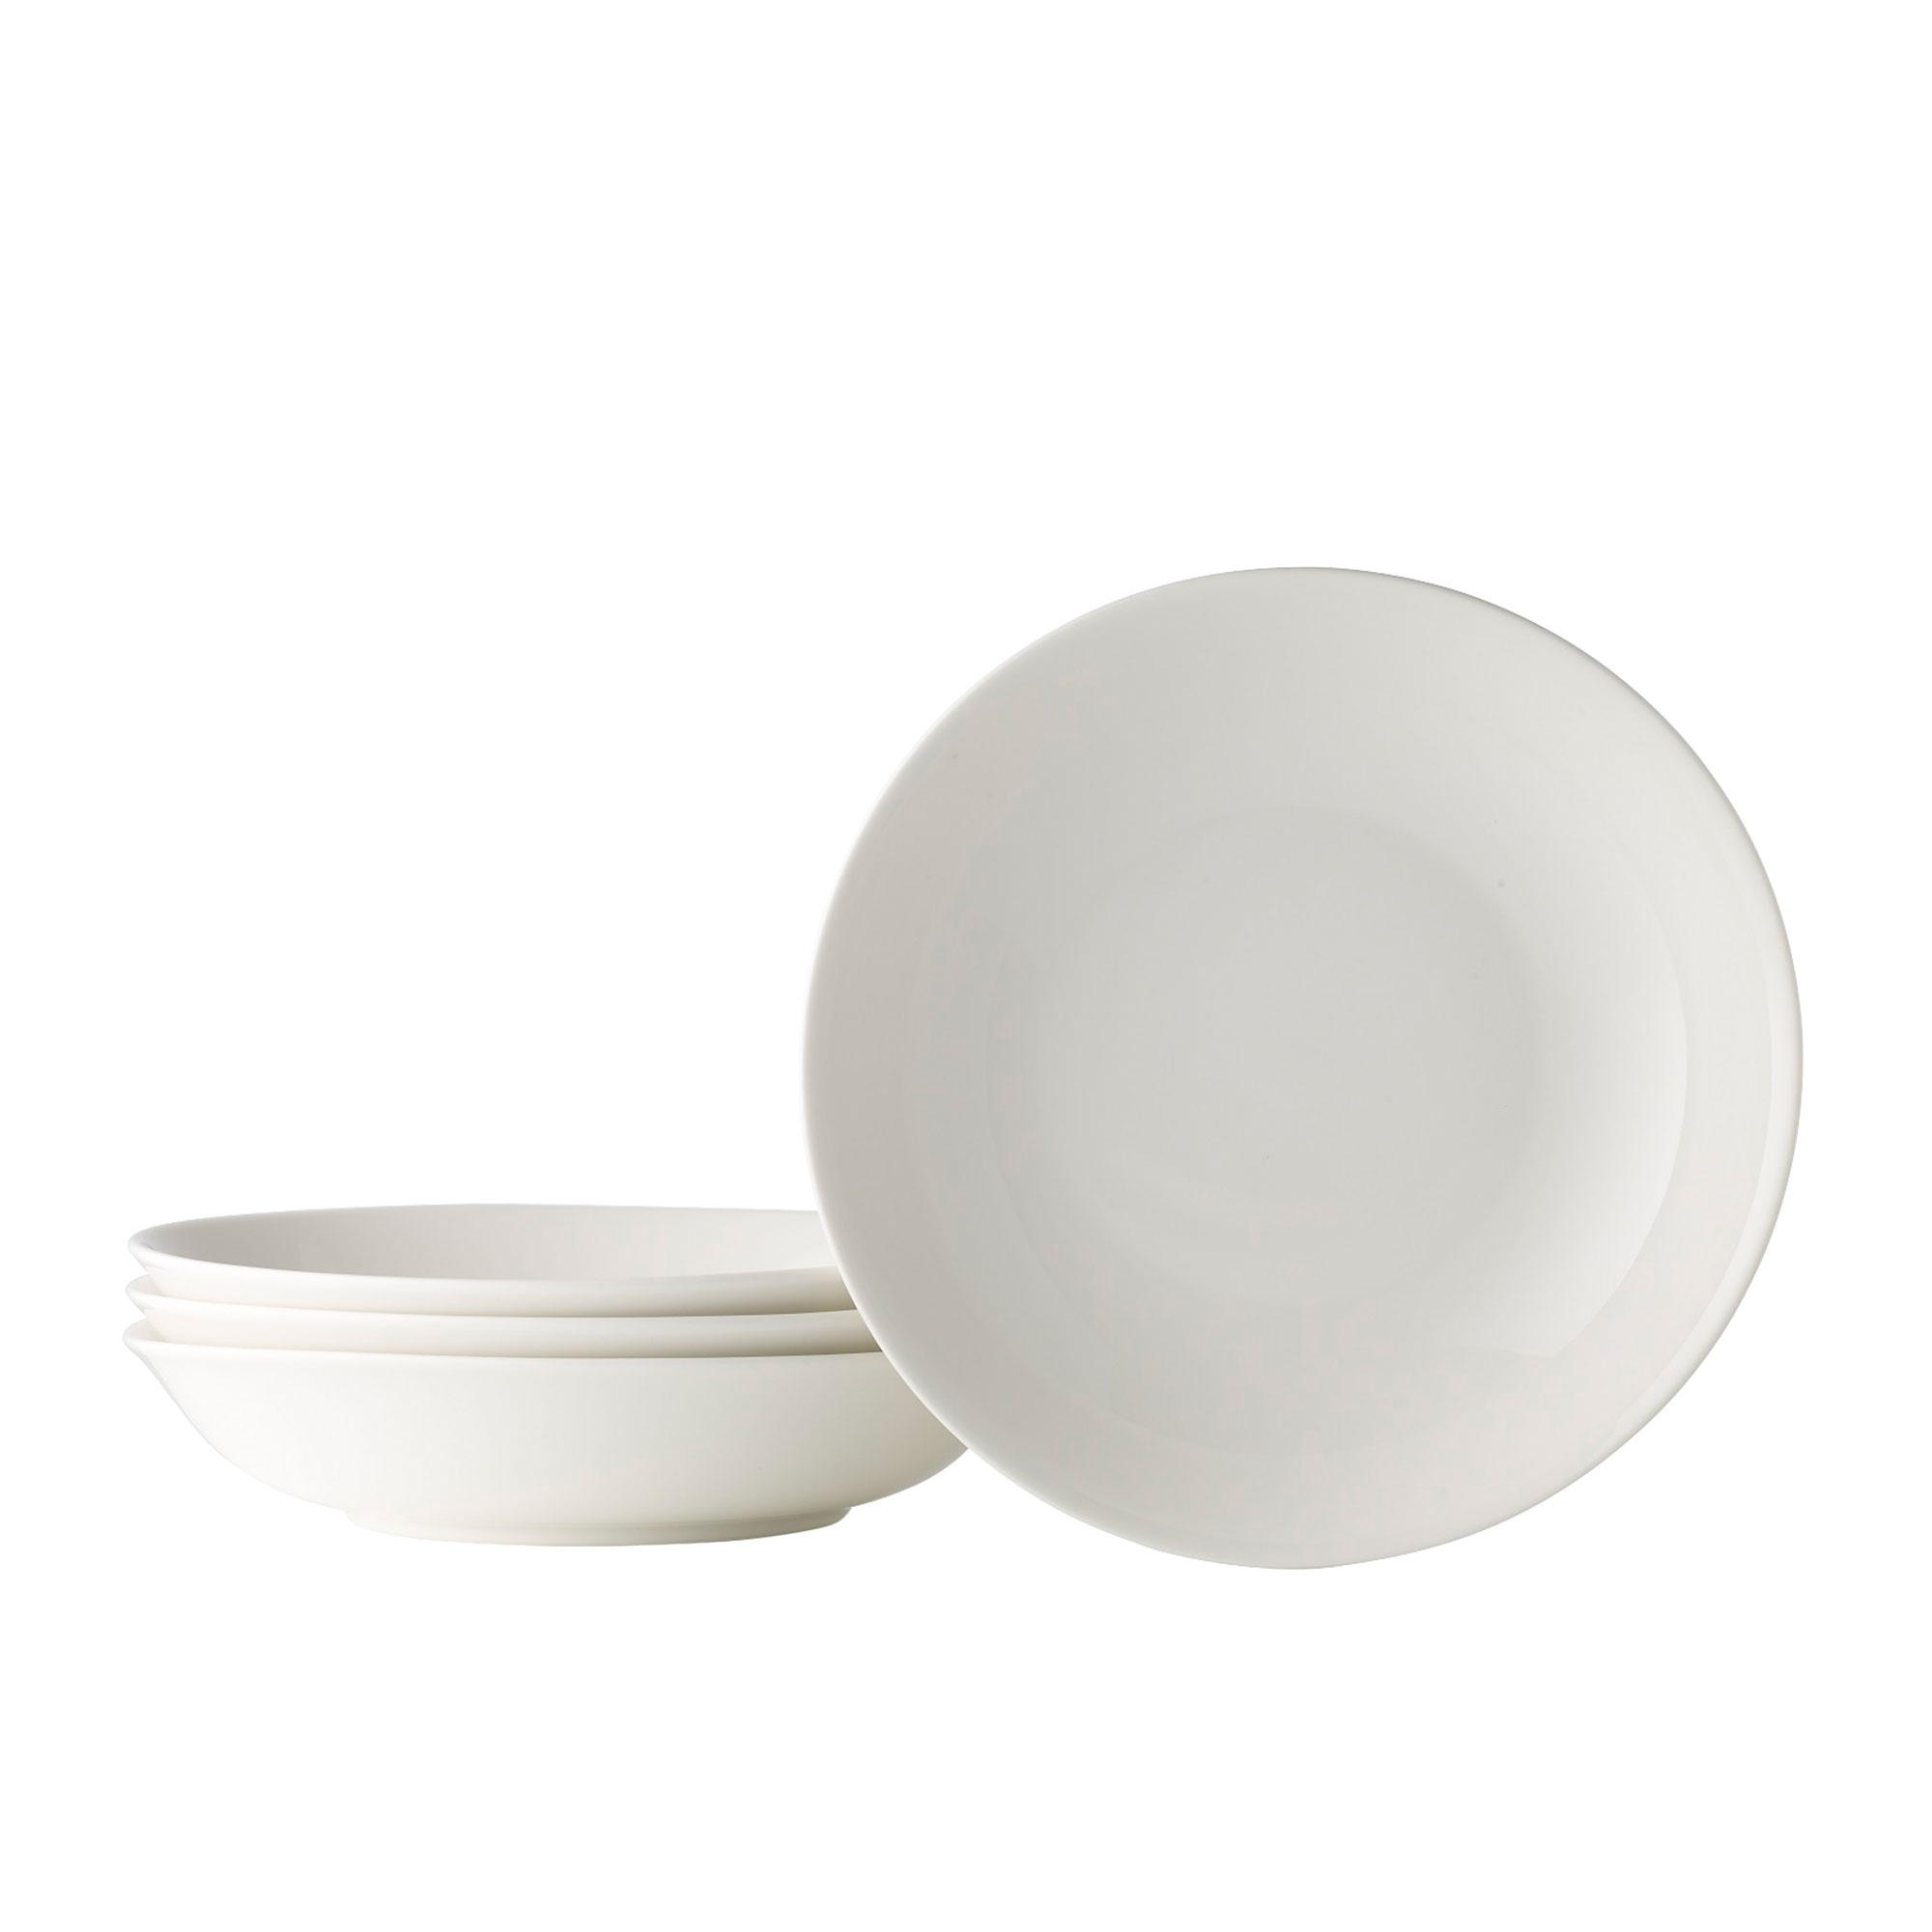 Noritake Everyday by Adam Liaw Pasta Bowl Set of 4 White Image 1